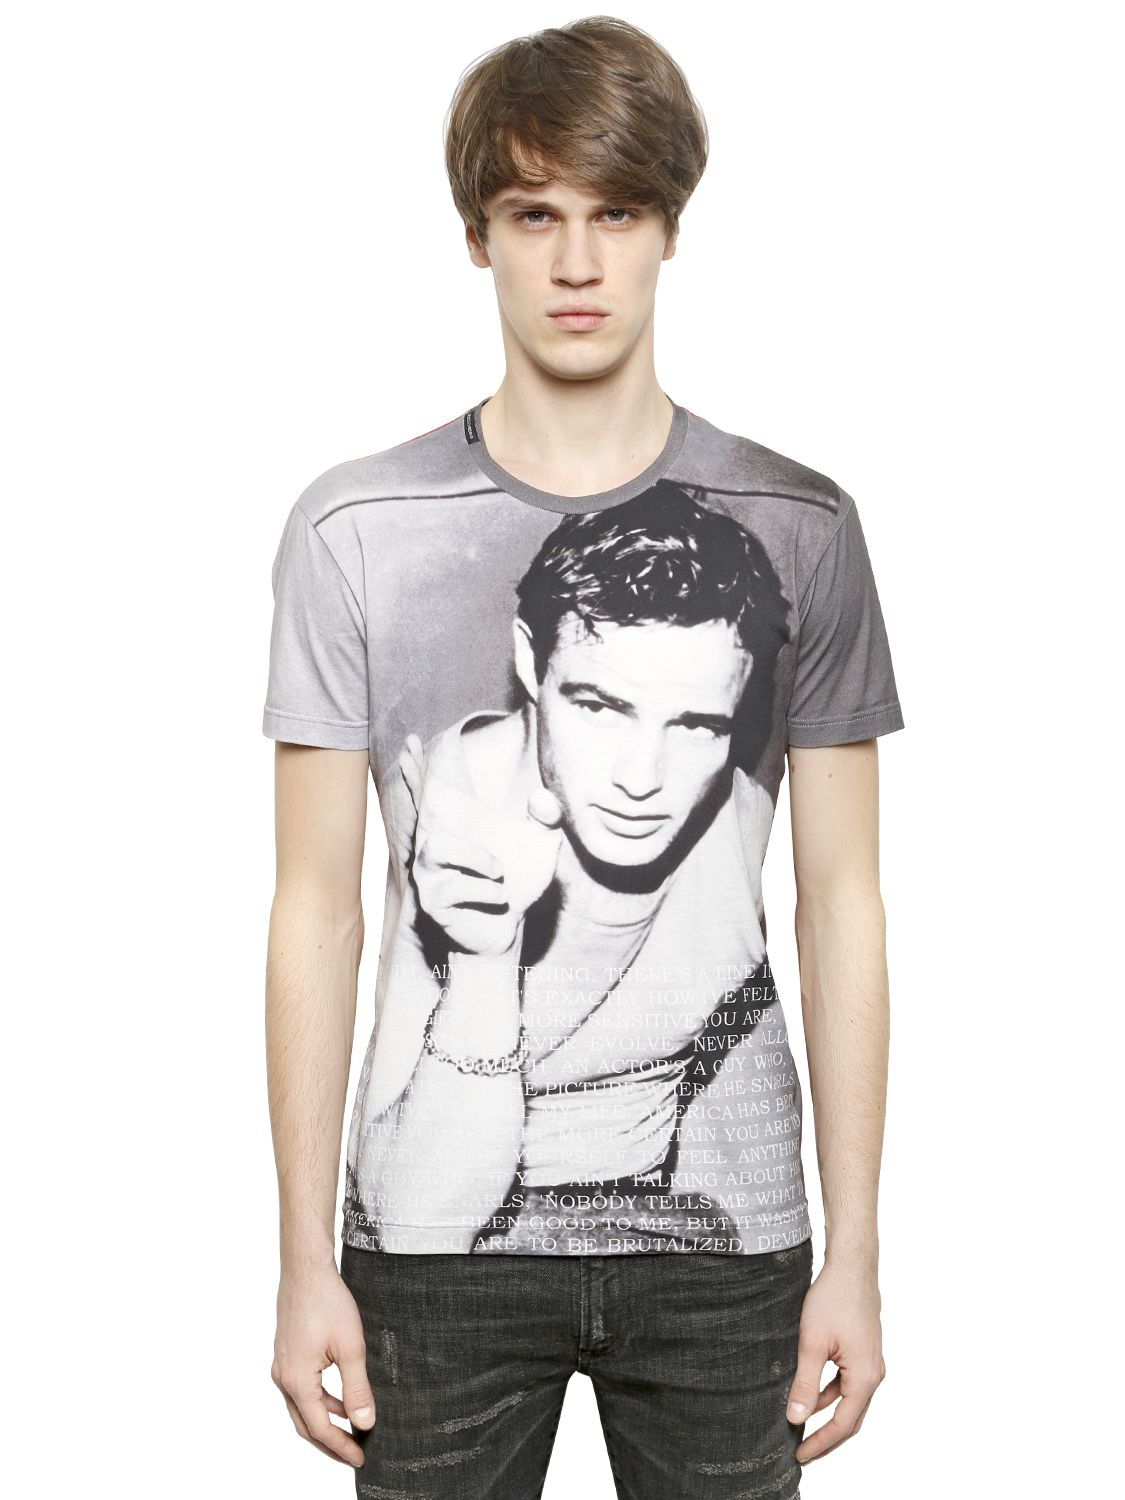 Lyst - Dolce & Gabbana Marlon Brando Tm Cotton Tshirt in Gray for Men